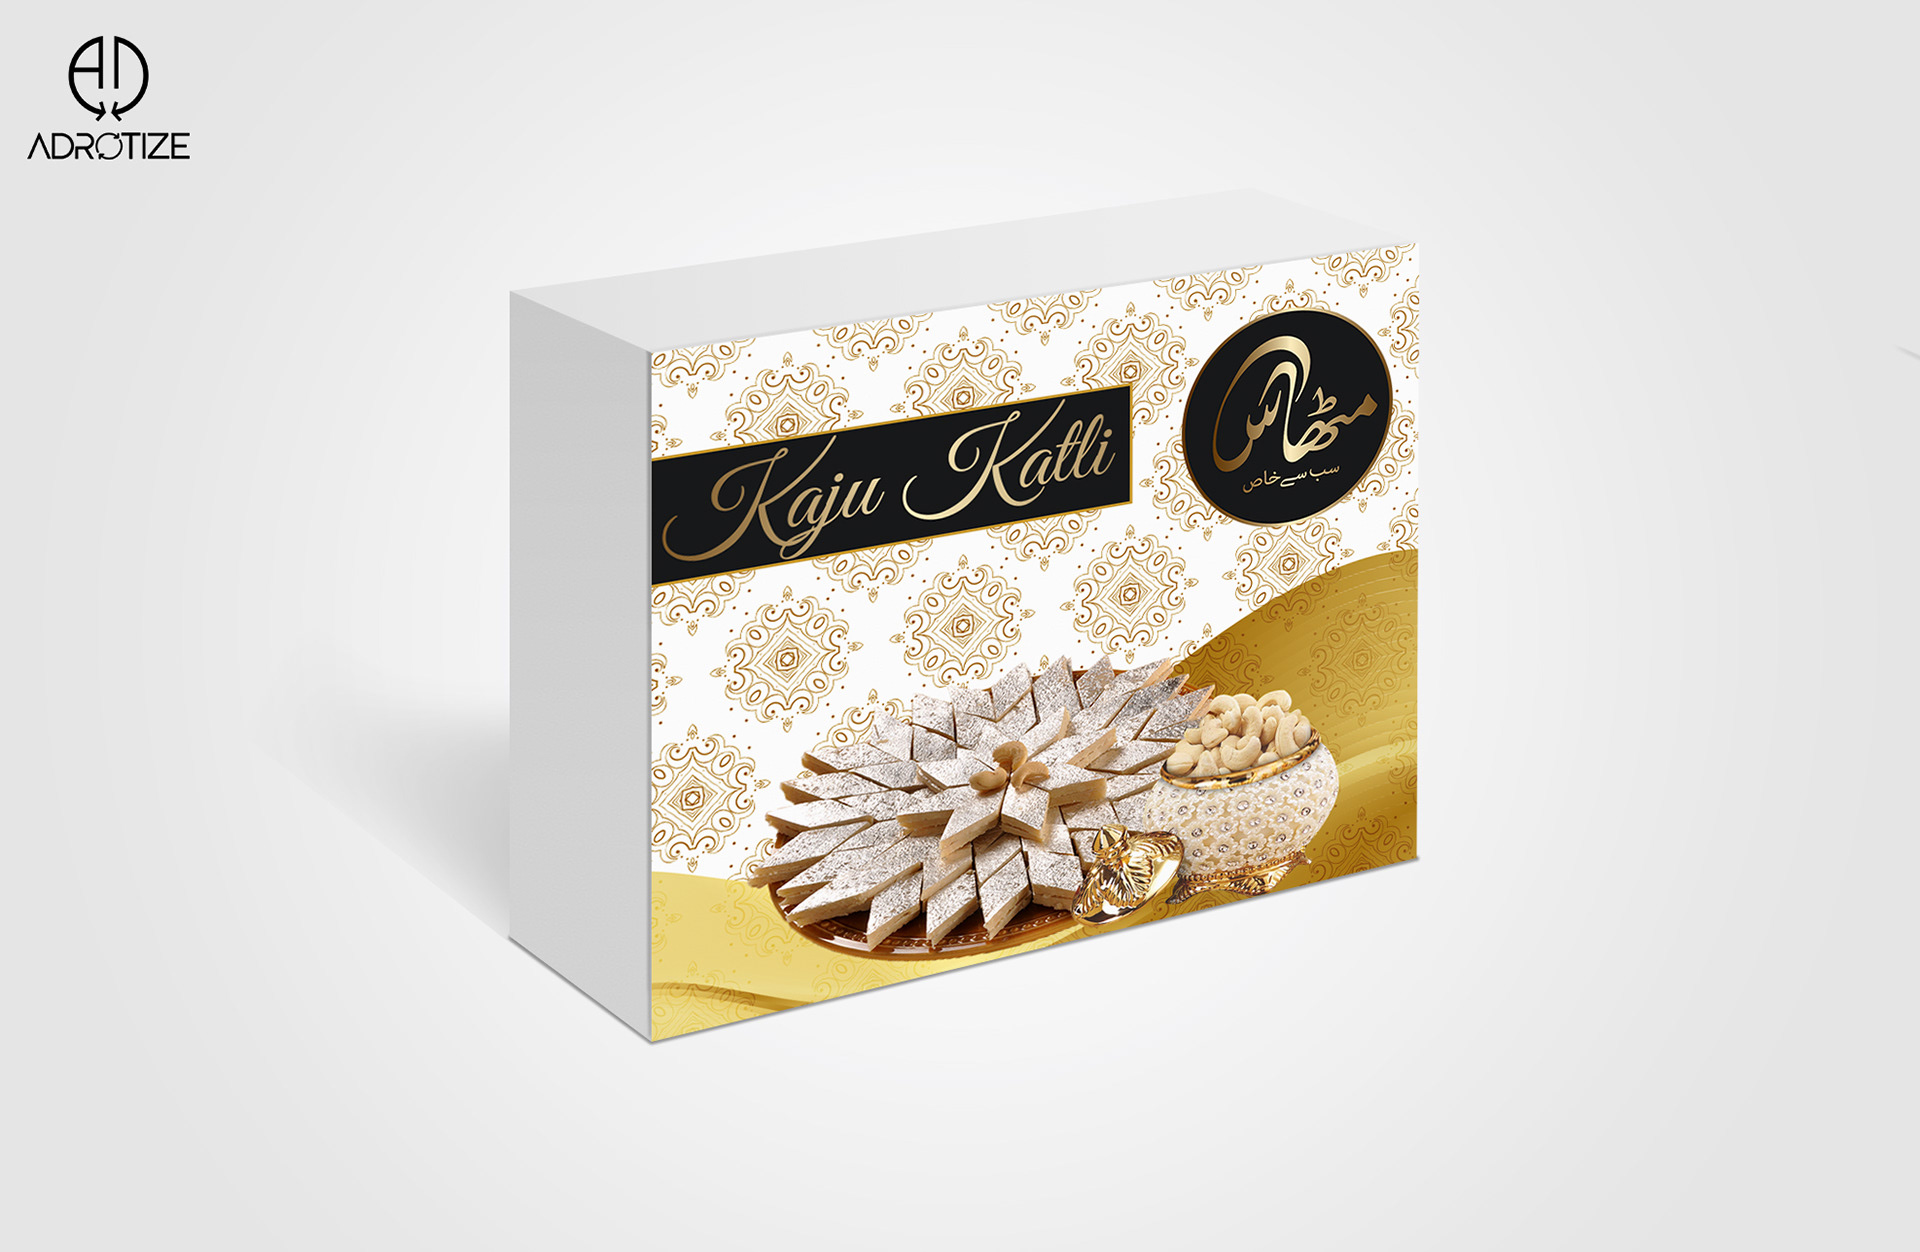 Premium Kaju Katli Box Design - Product Photography - adrotize 03